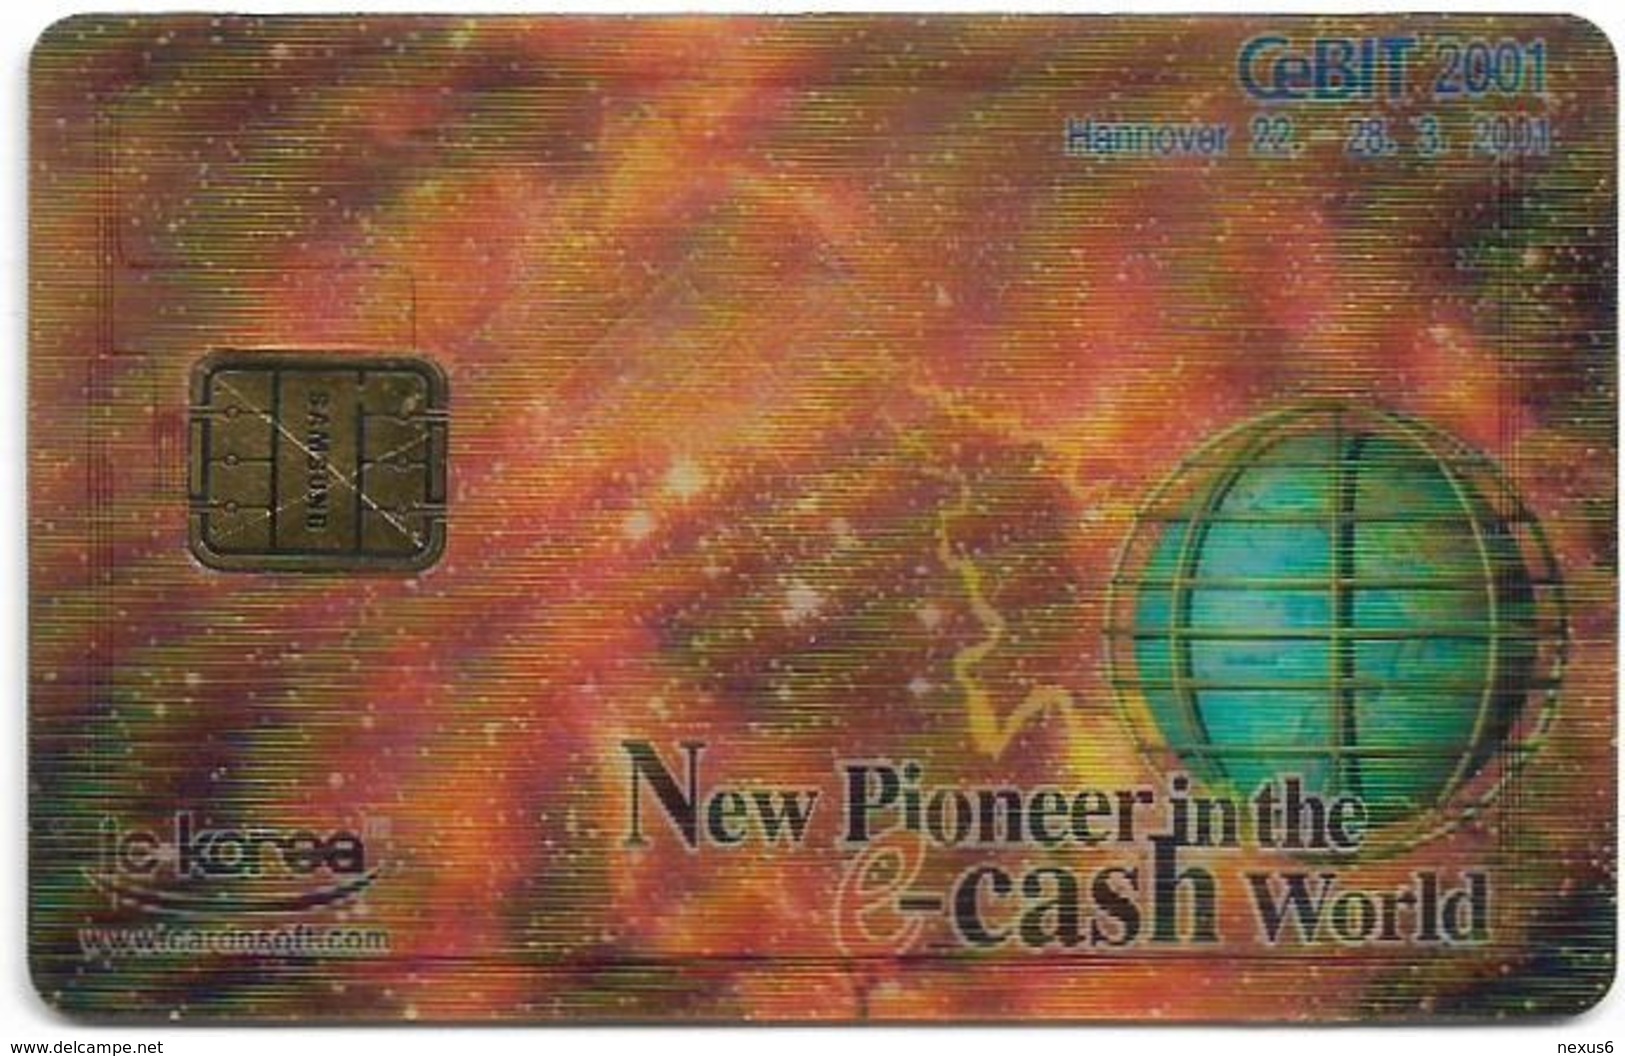 South Korea - IC Korea - Cebit 2001 Hannover Expo Demo 3D Card #3(Chip) - Corea Del Sud